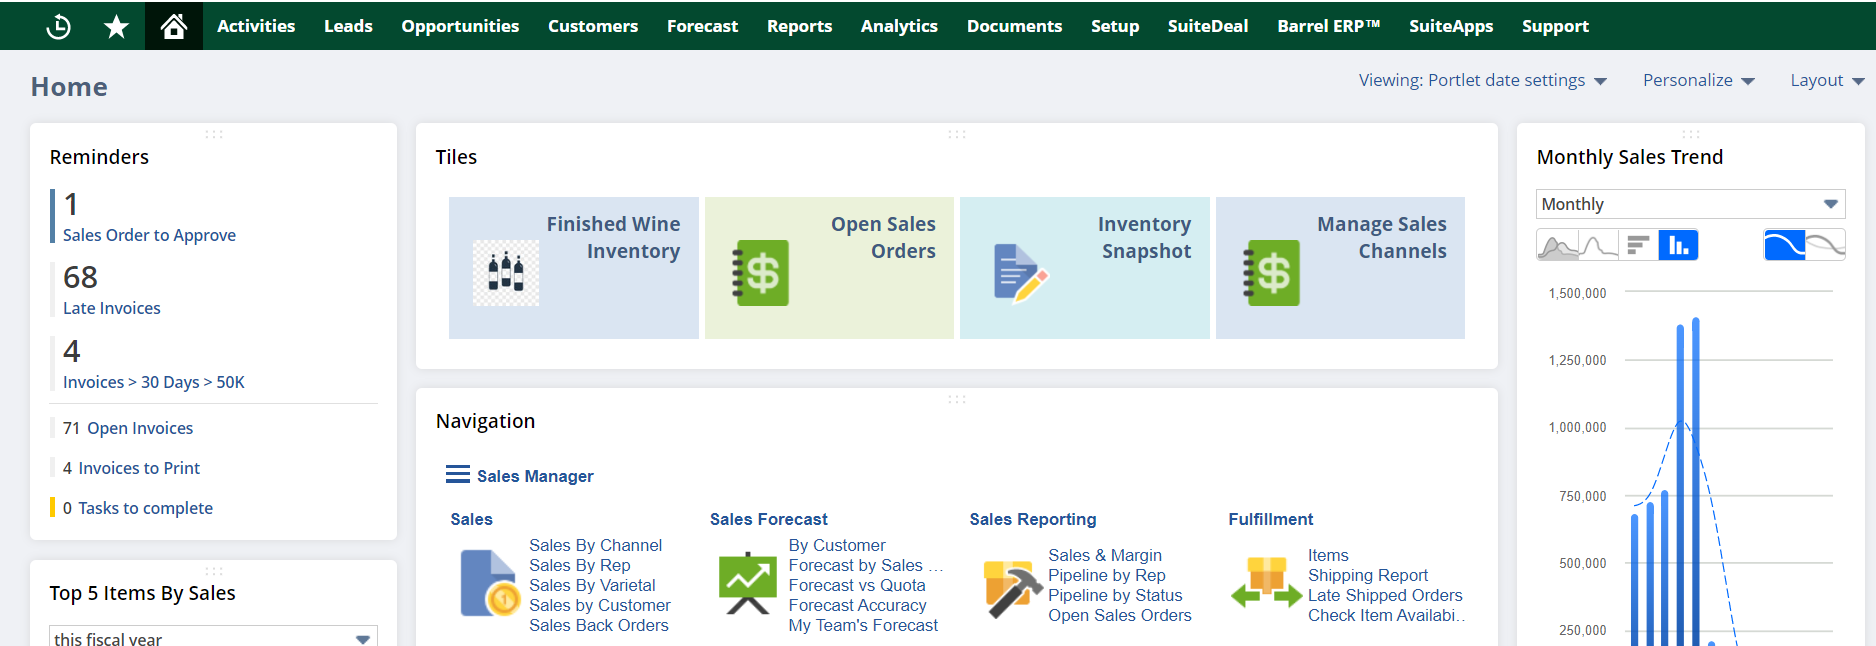 Homepage of the Barrel ERP Dashboard